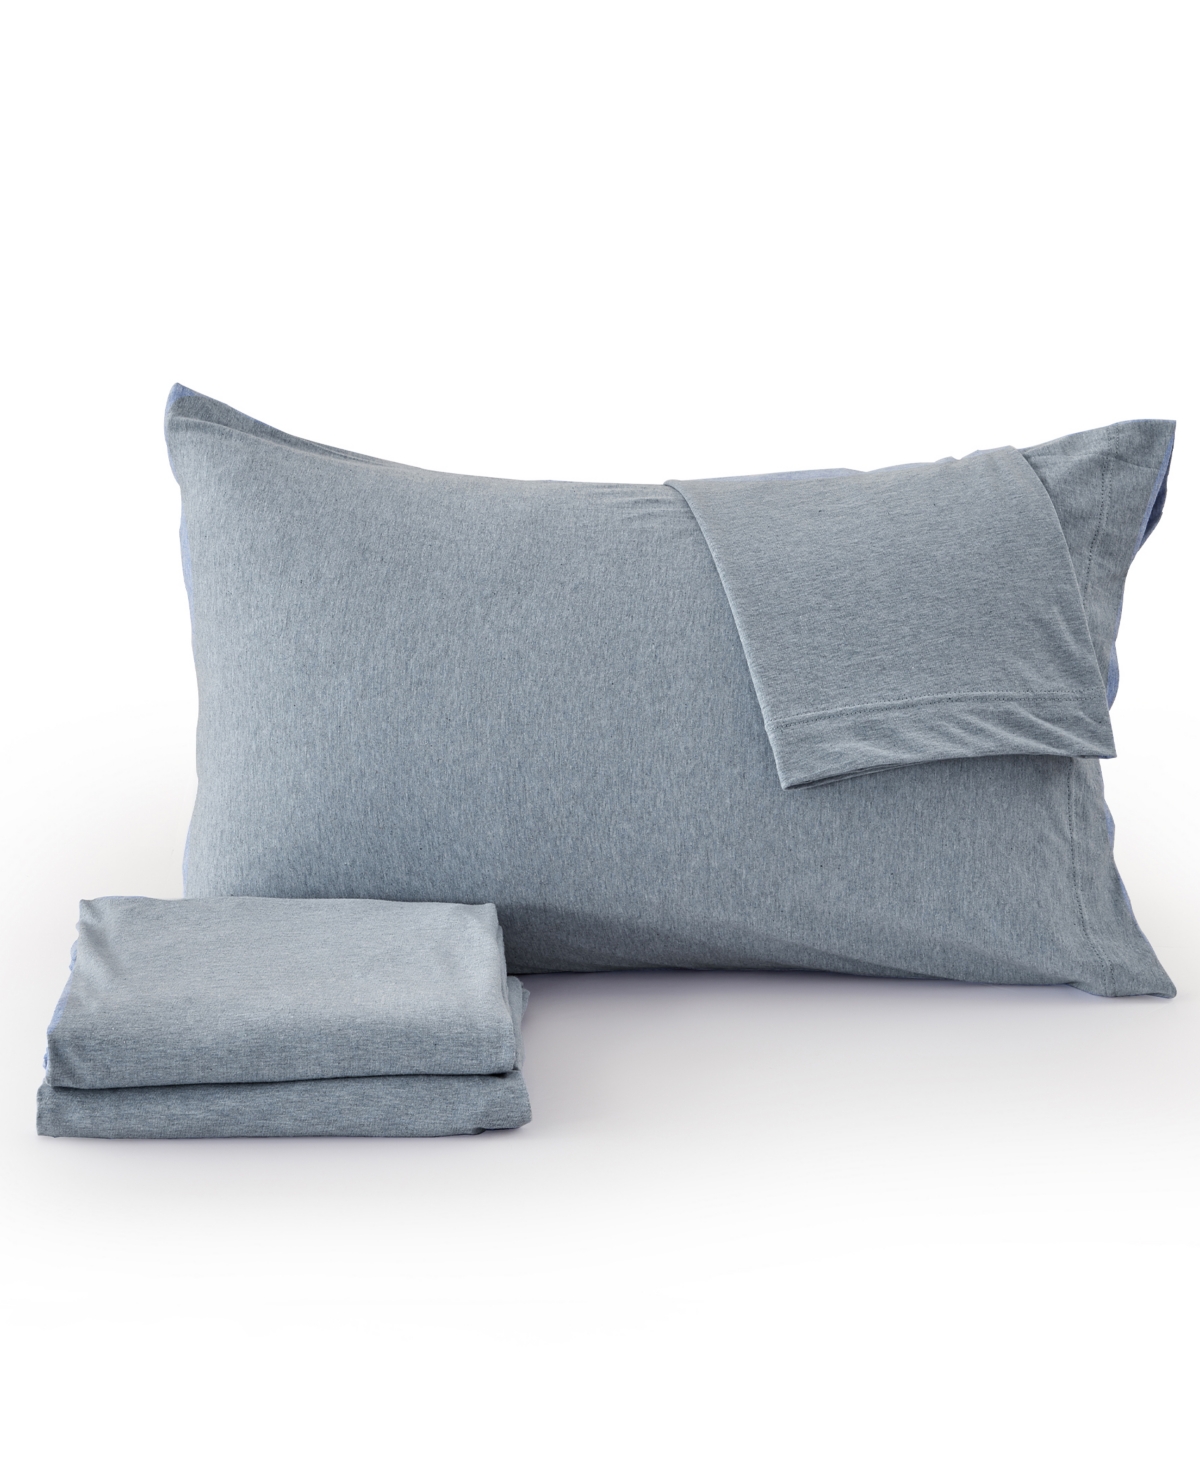 Premium Comforts Heathered Melange T-shirt Jersey Knit Cotton Blend 4 Piece Sheet Set, Twin Xl In Sky Blue